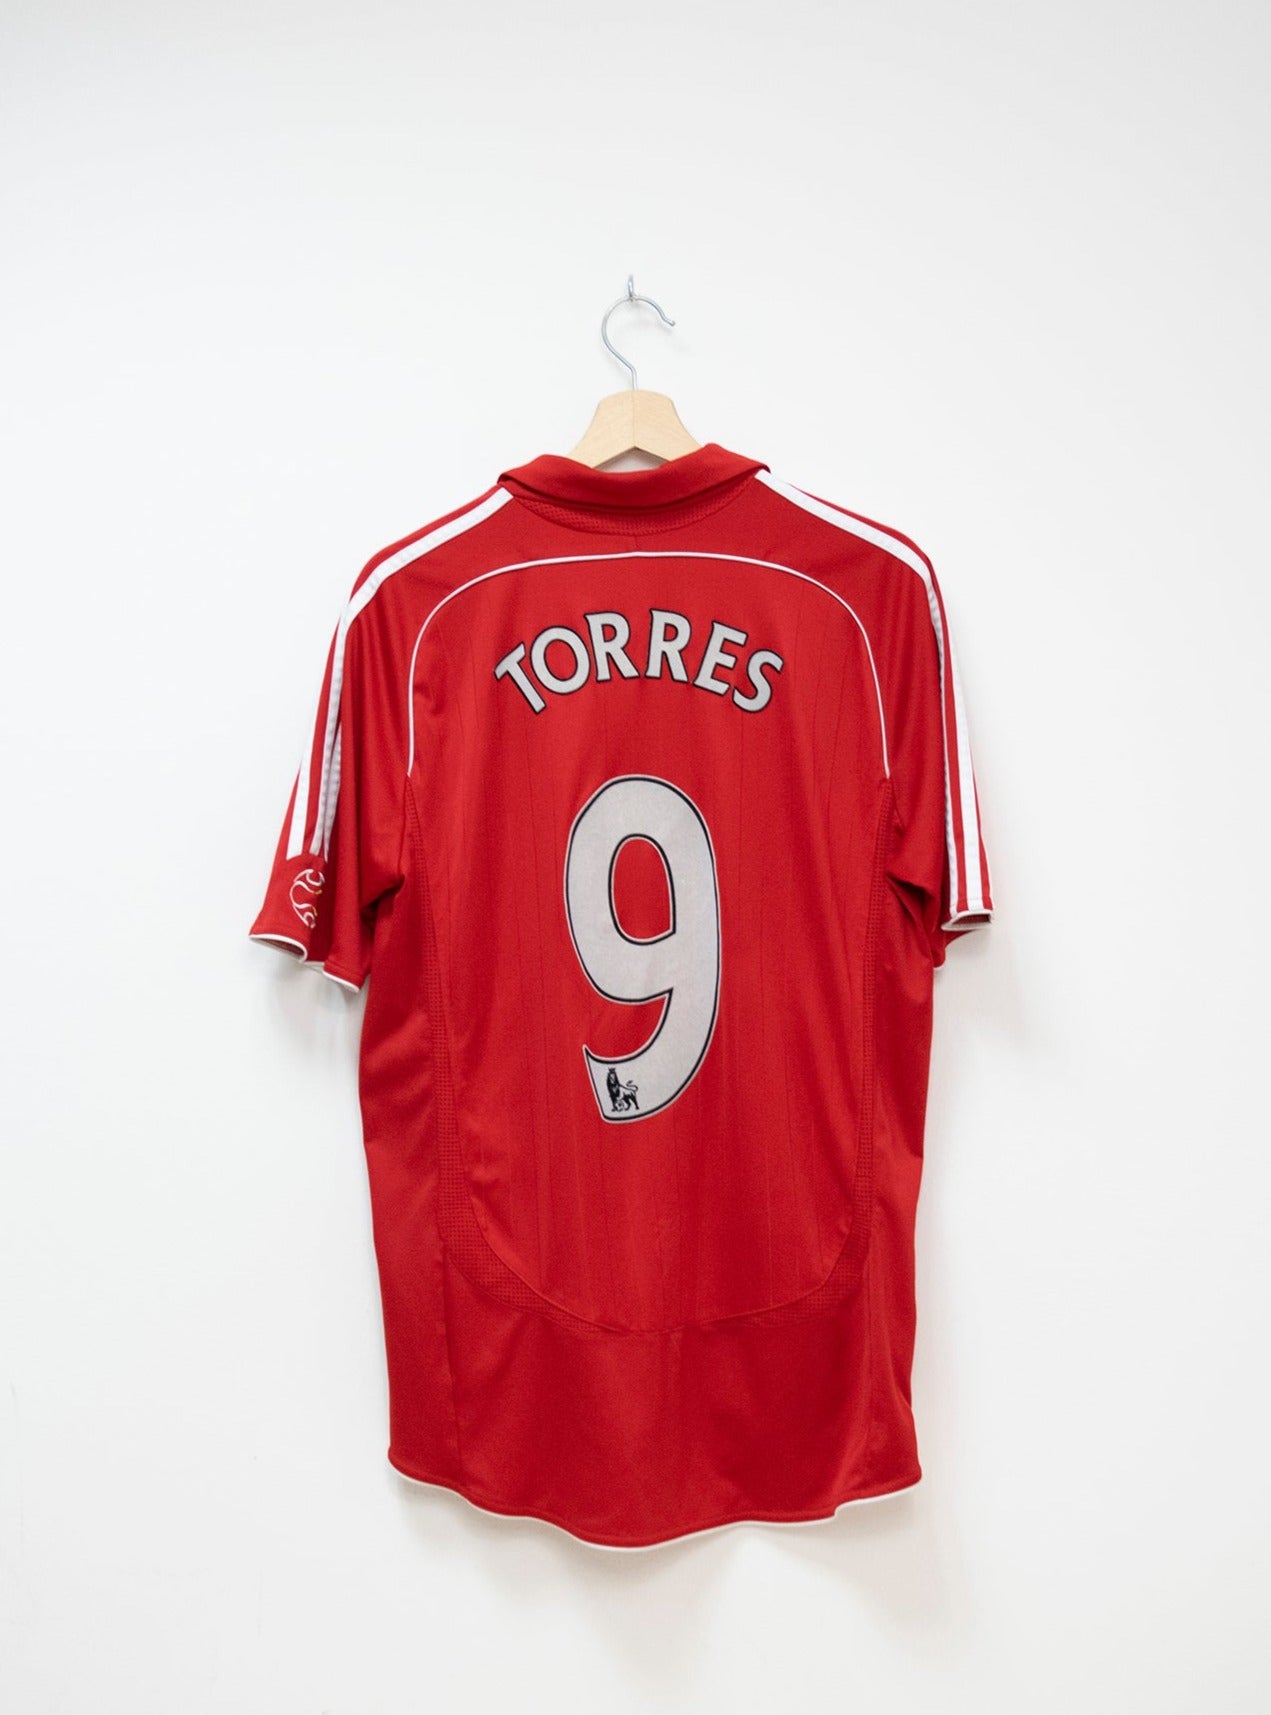 2008 Adidas Fernando Torres Liverpool Jersey - M